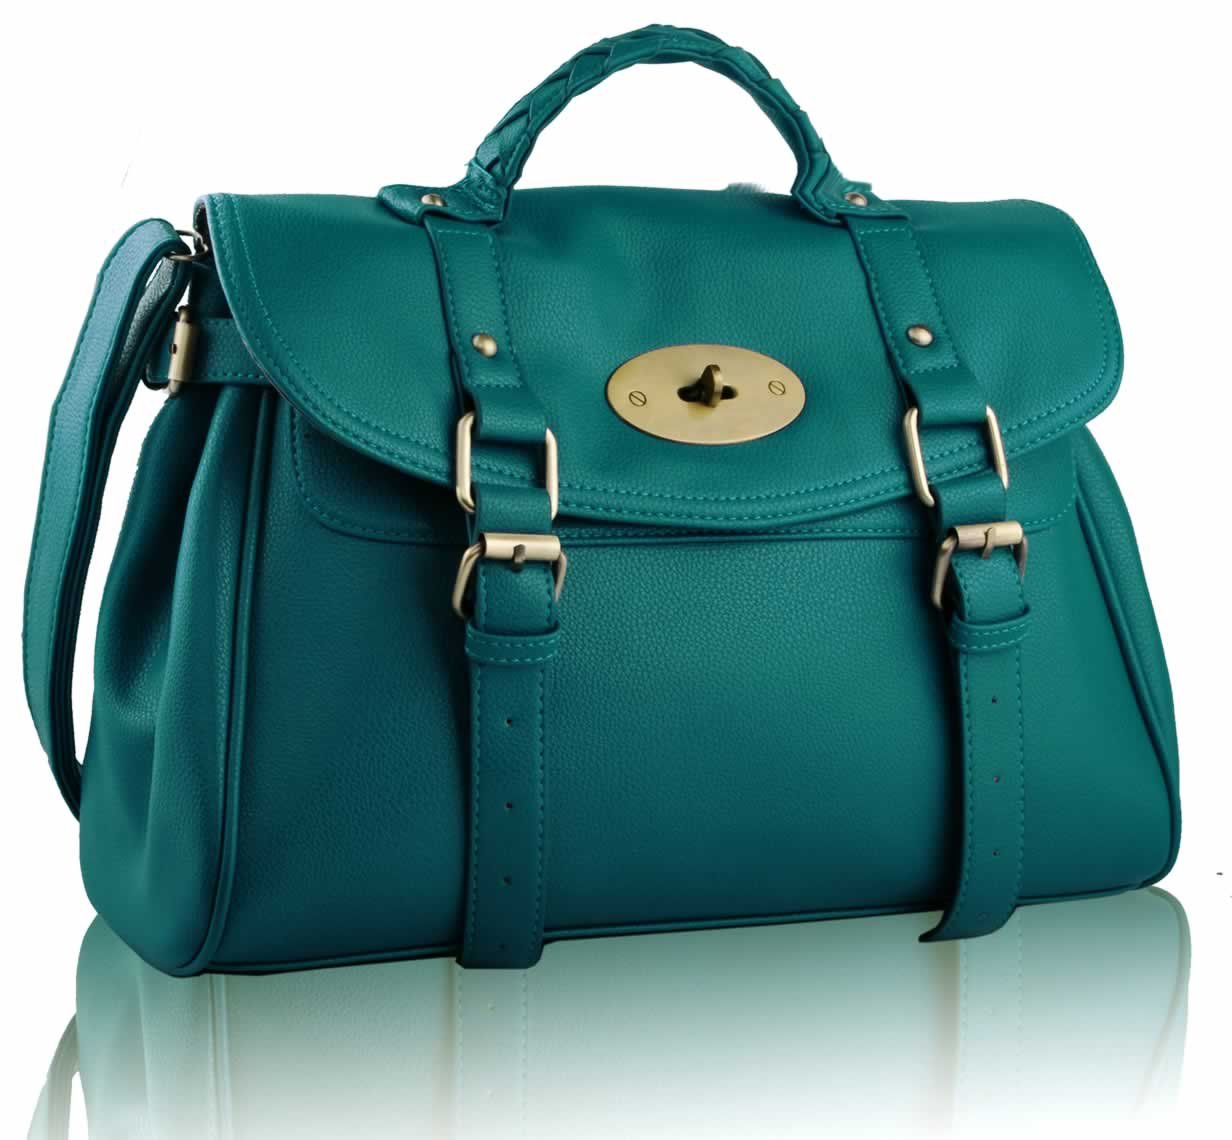 Teal Handbags Cheap. Chala Crossbody Cell Phone Purse - Women PU Leather Multicolor Handbag with ...